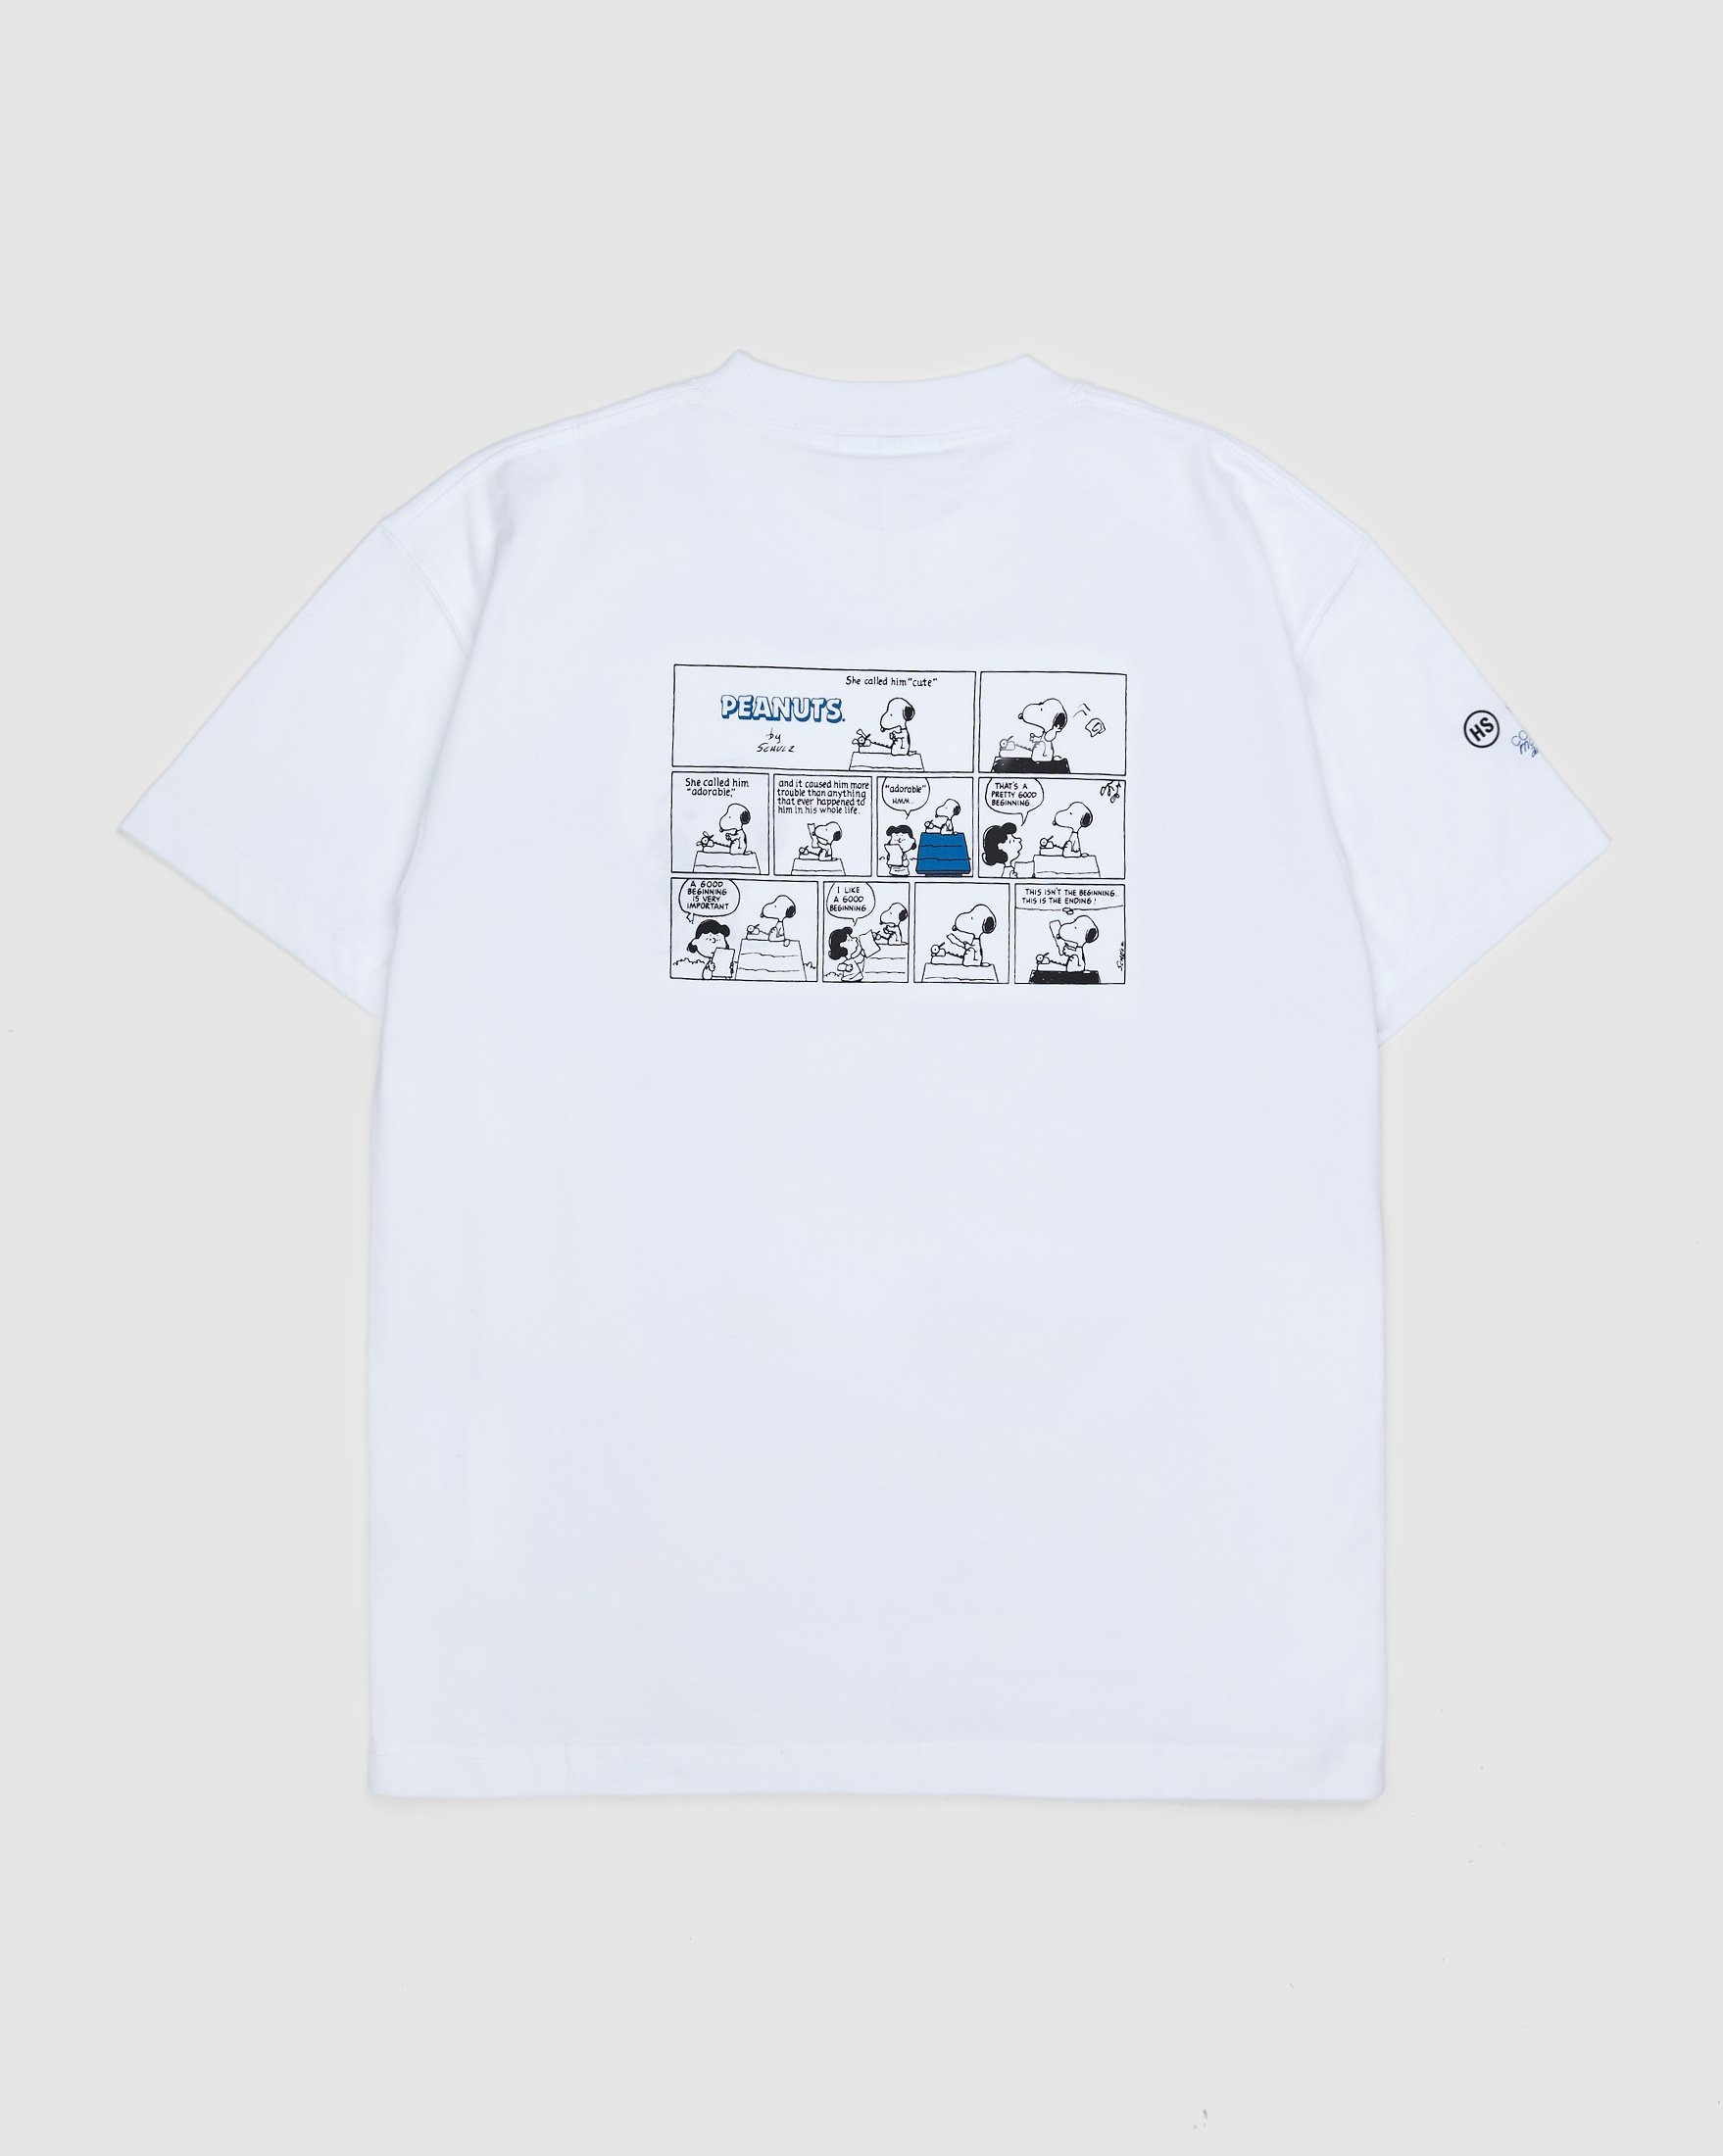 Colette Mon Amour x Soulland – Snoopy Comics White T-Shirt - Tops - White - Image 2